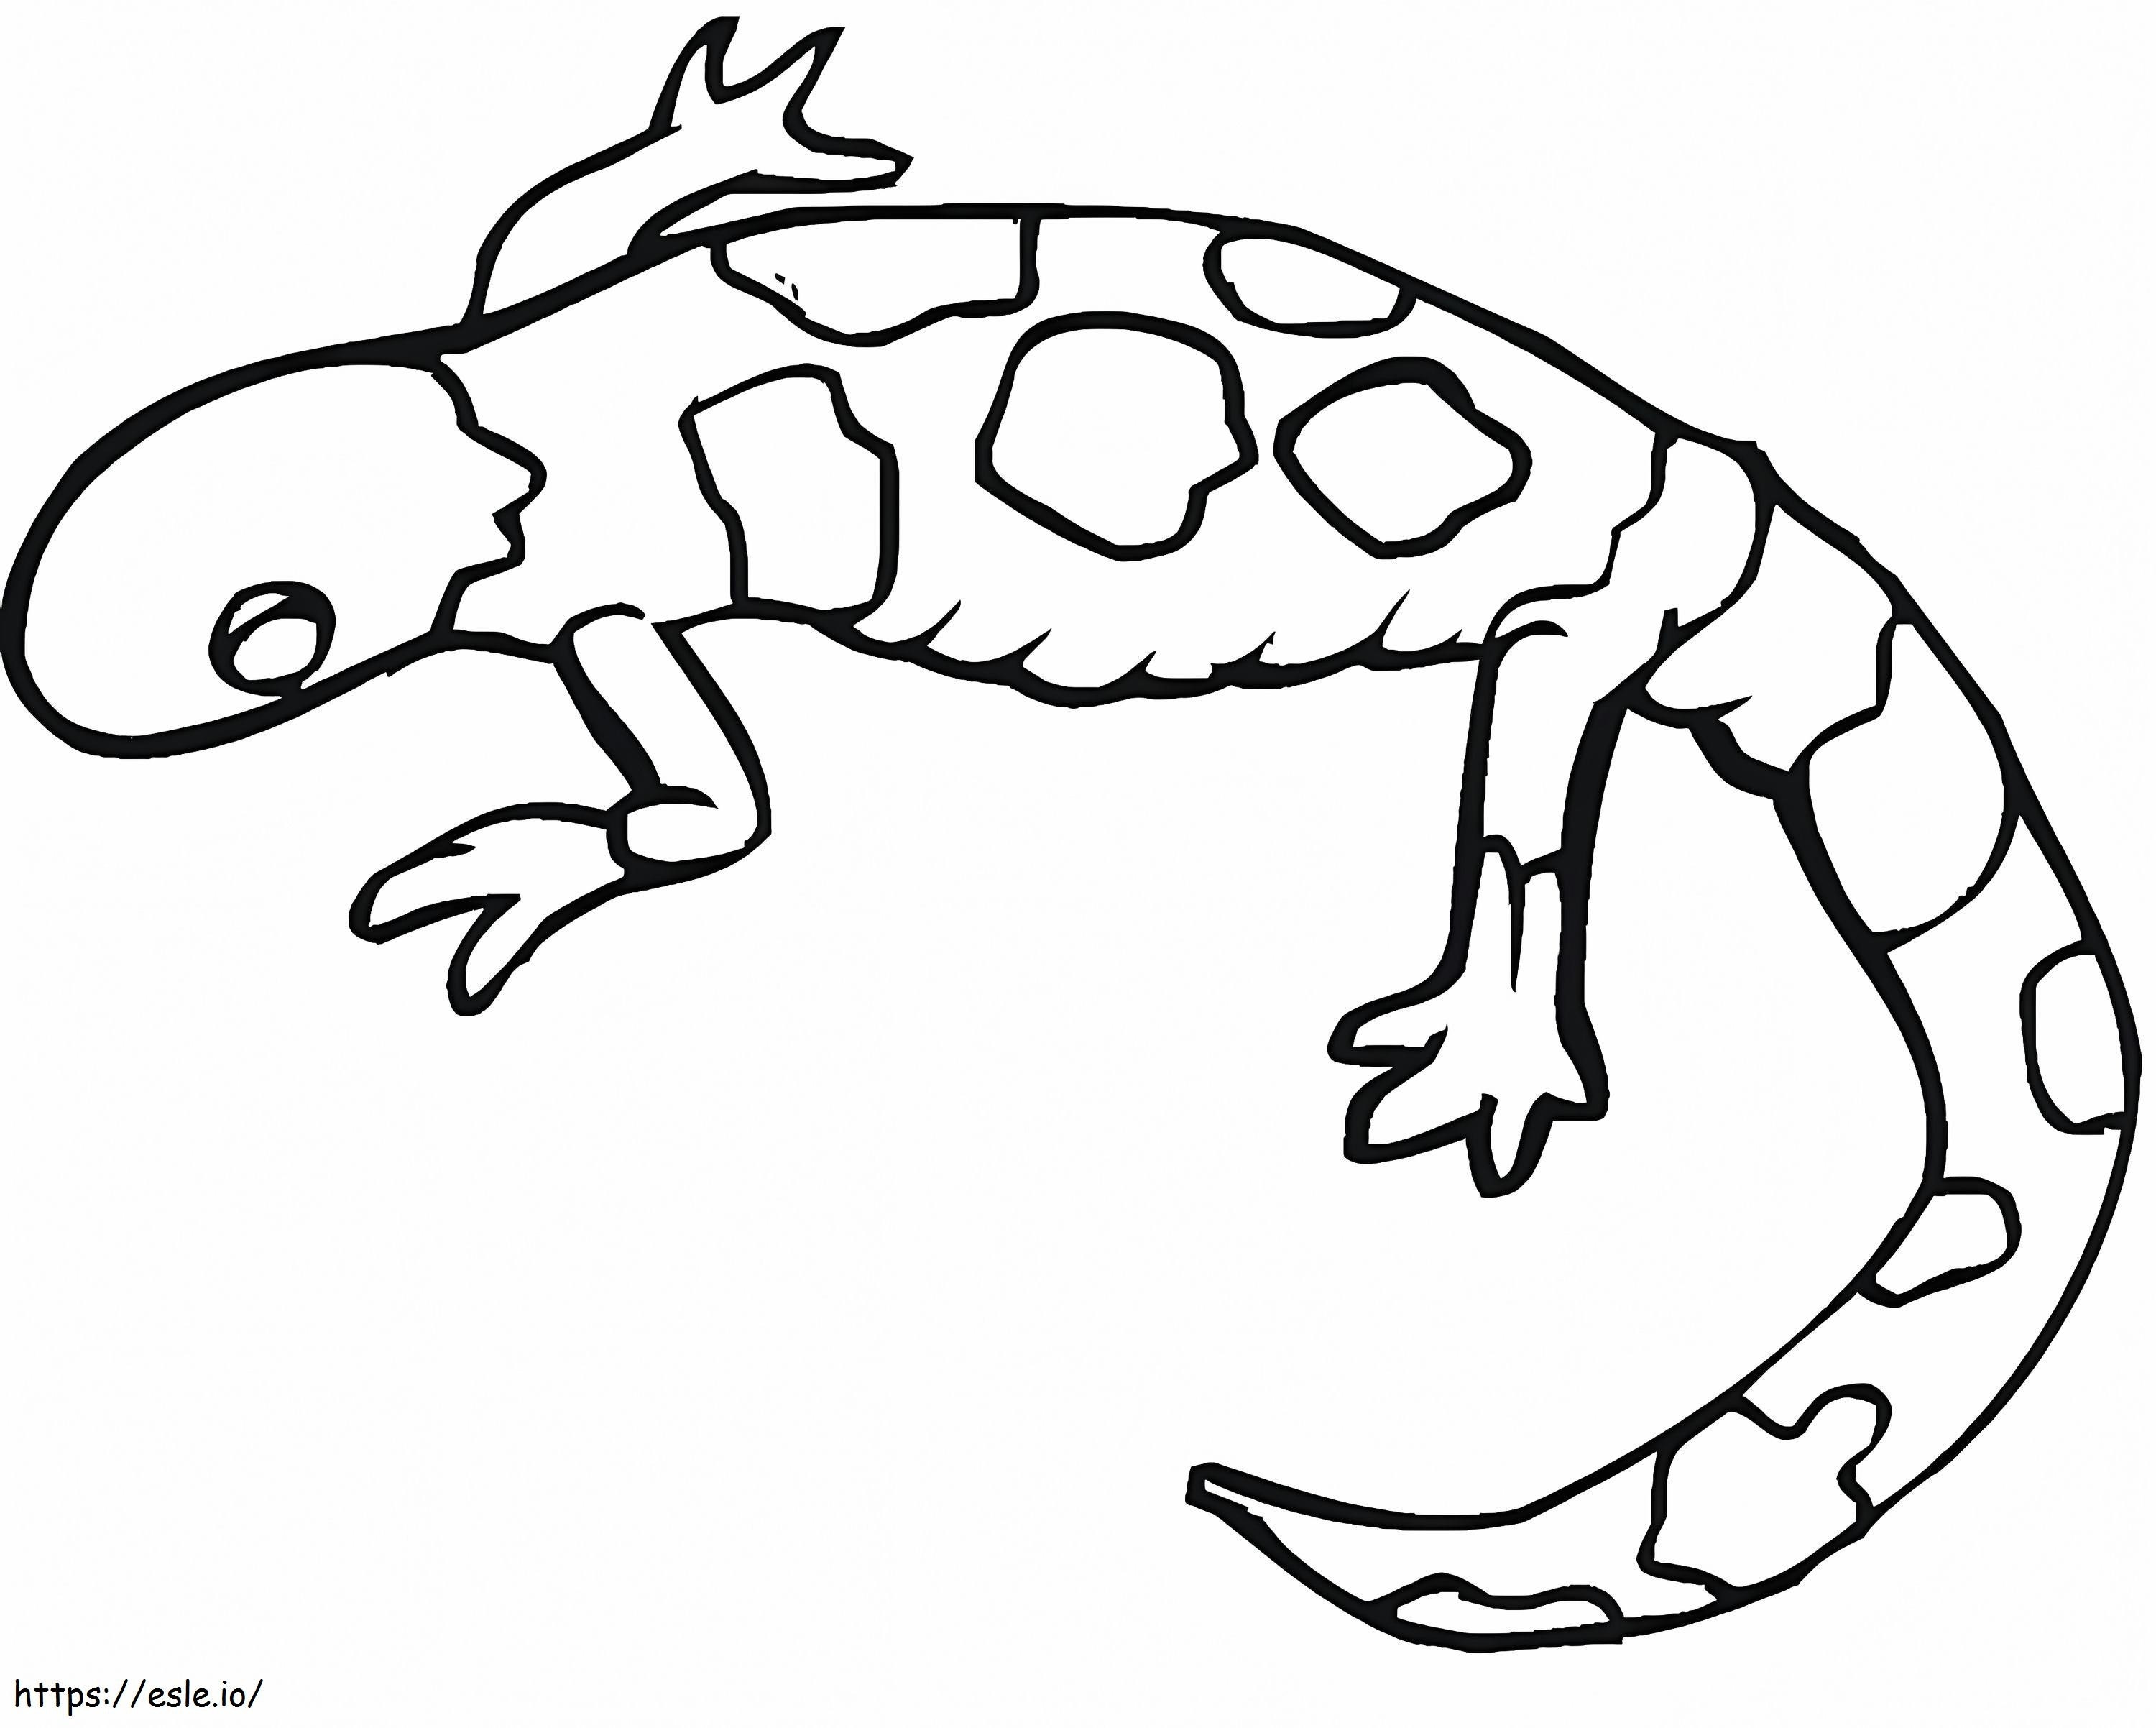 Salamander 7 kleurplaat kleurplaat